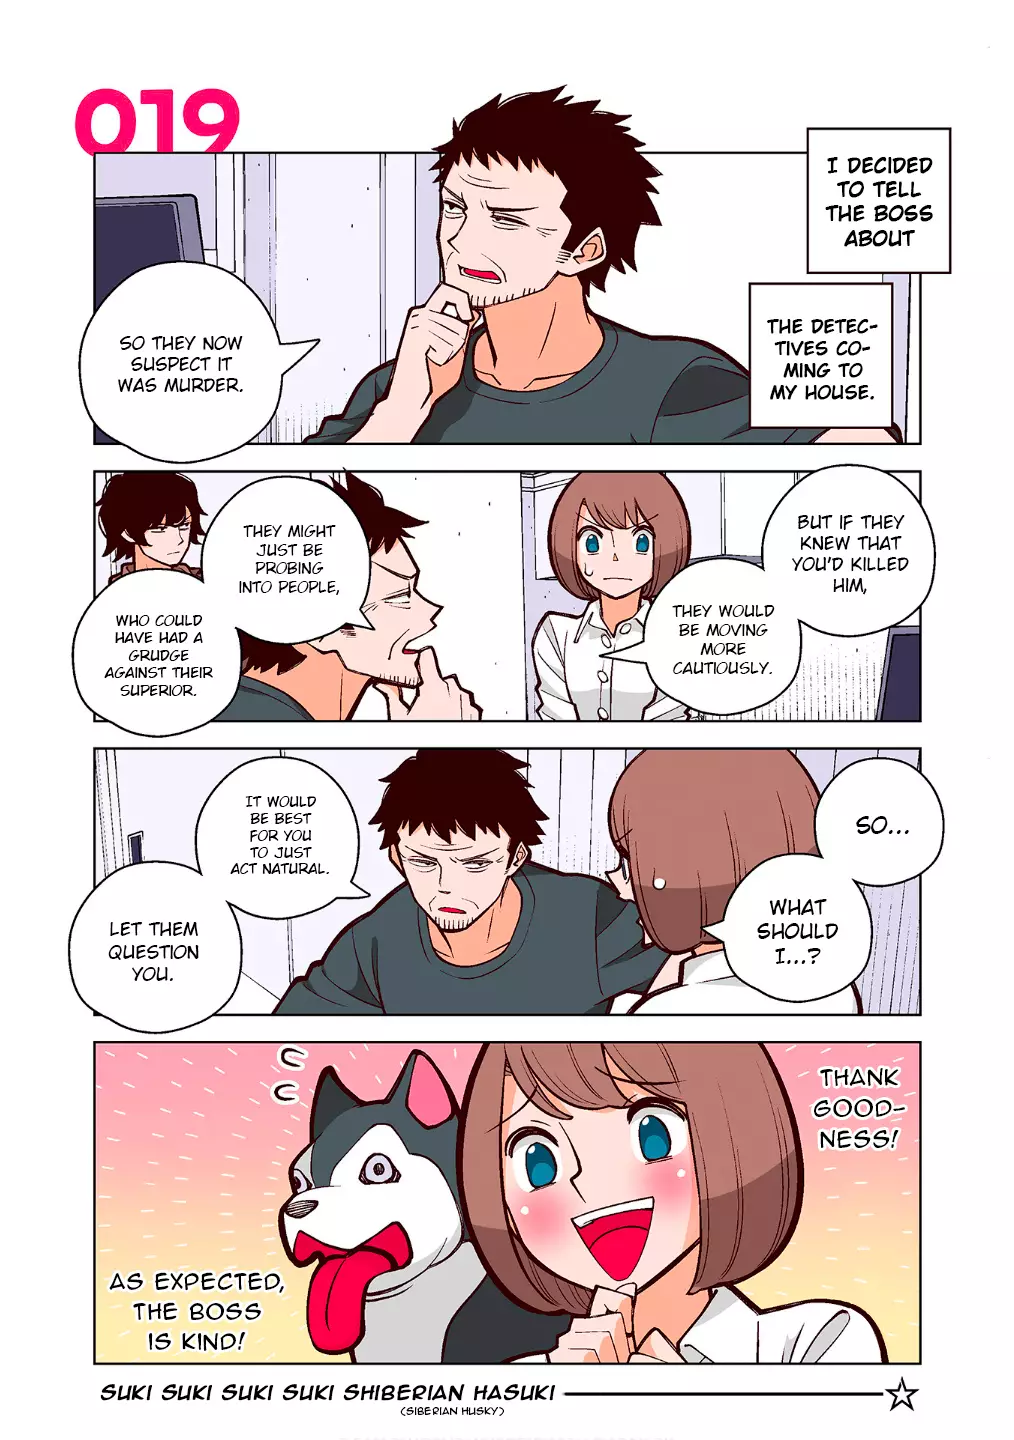 Kanako's Life As An Assassin - 19 page 1